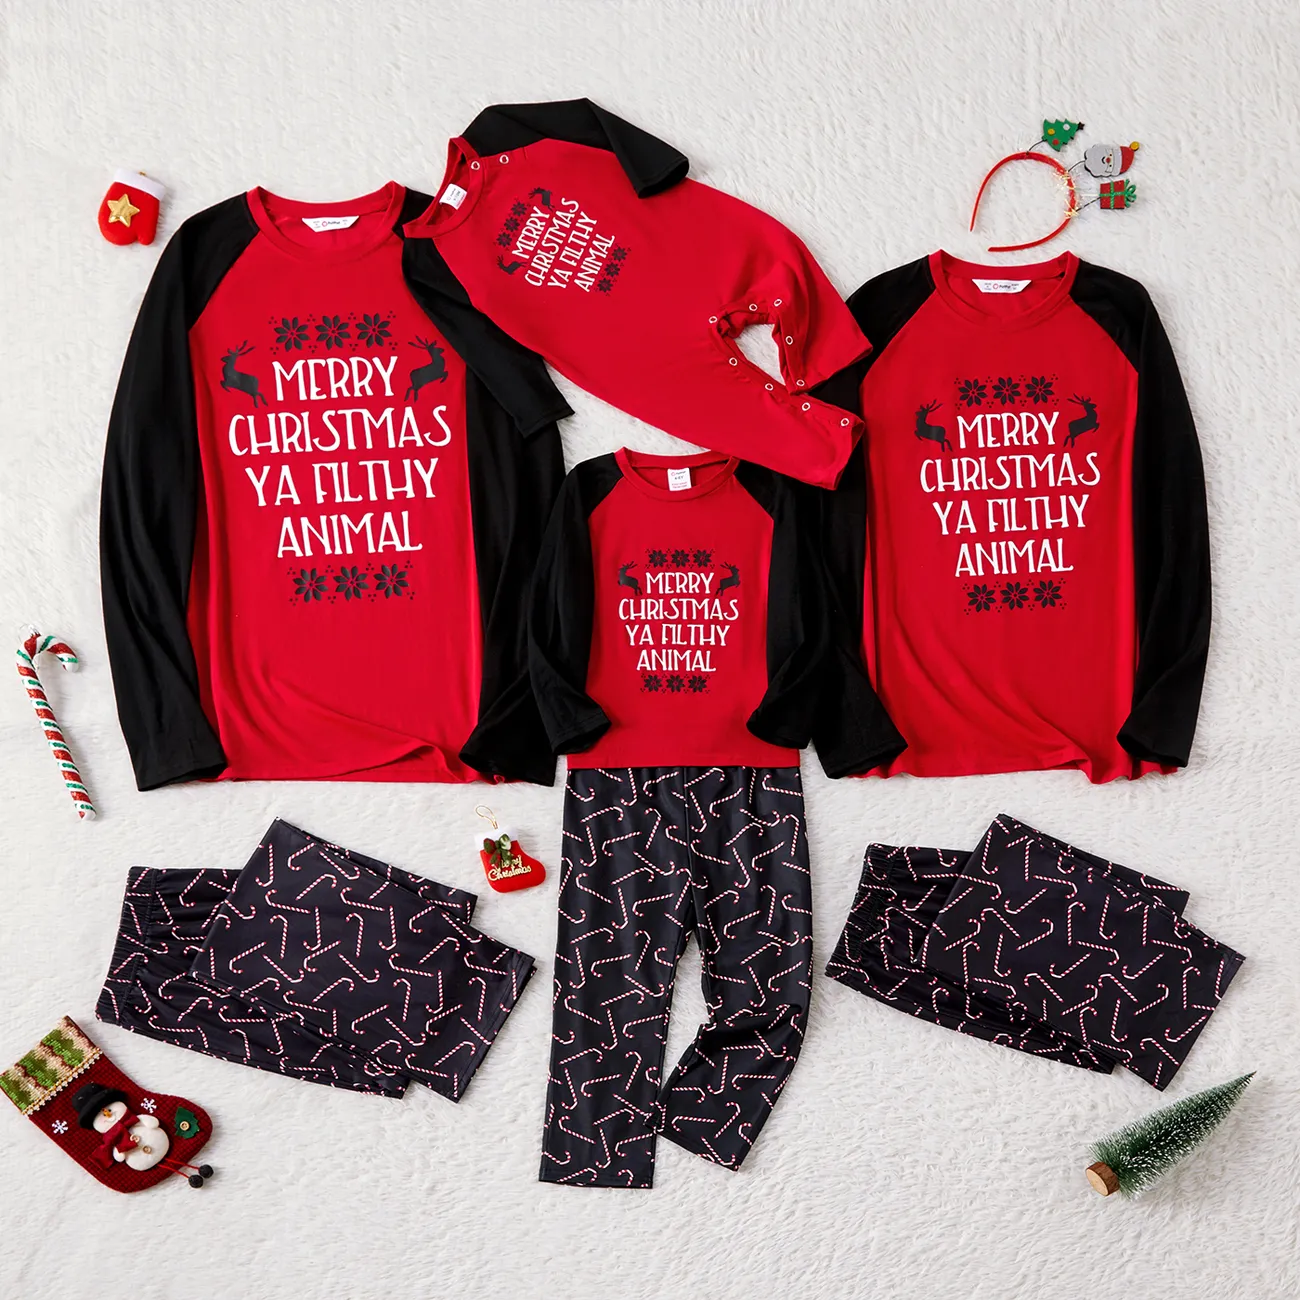 Noël Look Familial Manches longues Tenues de famille assorties Pyjamas (Flame Resistant) Rouge big image 1